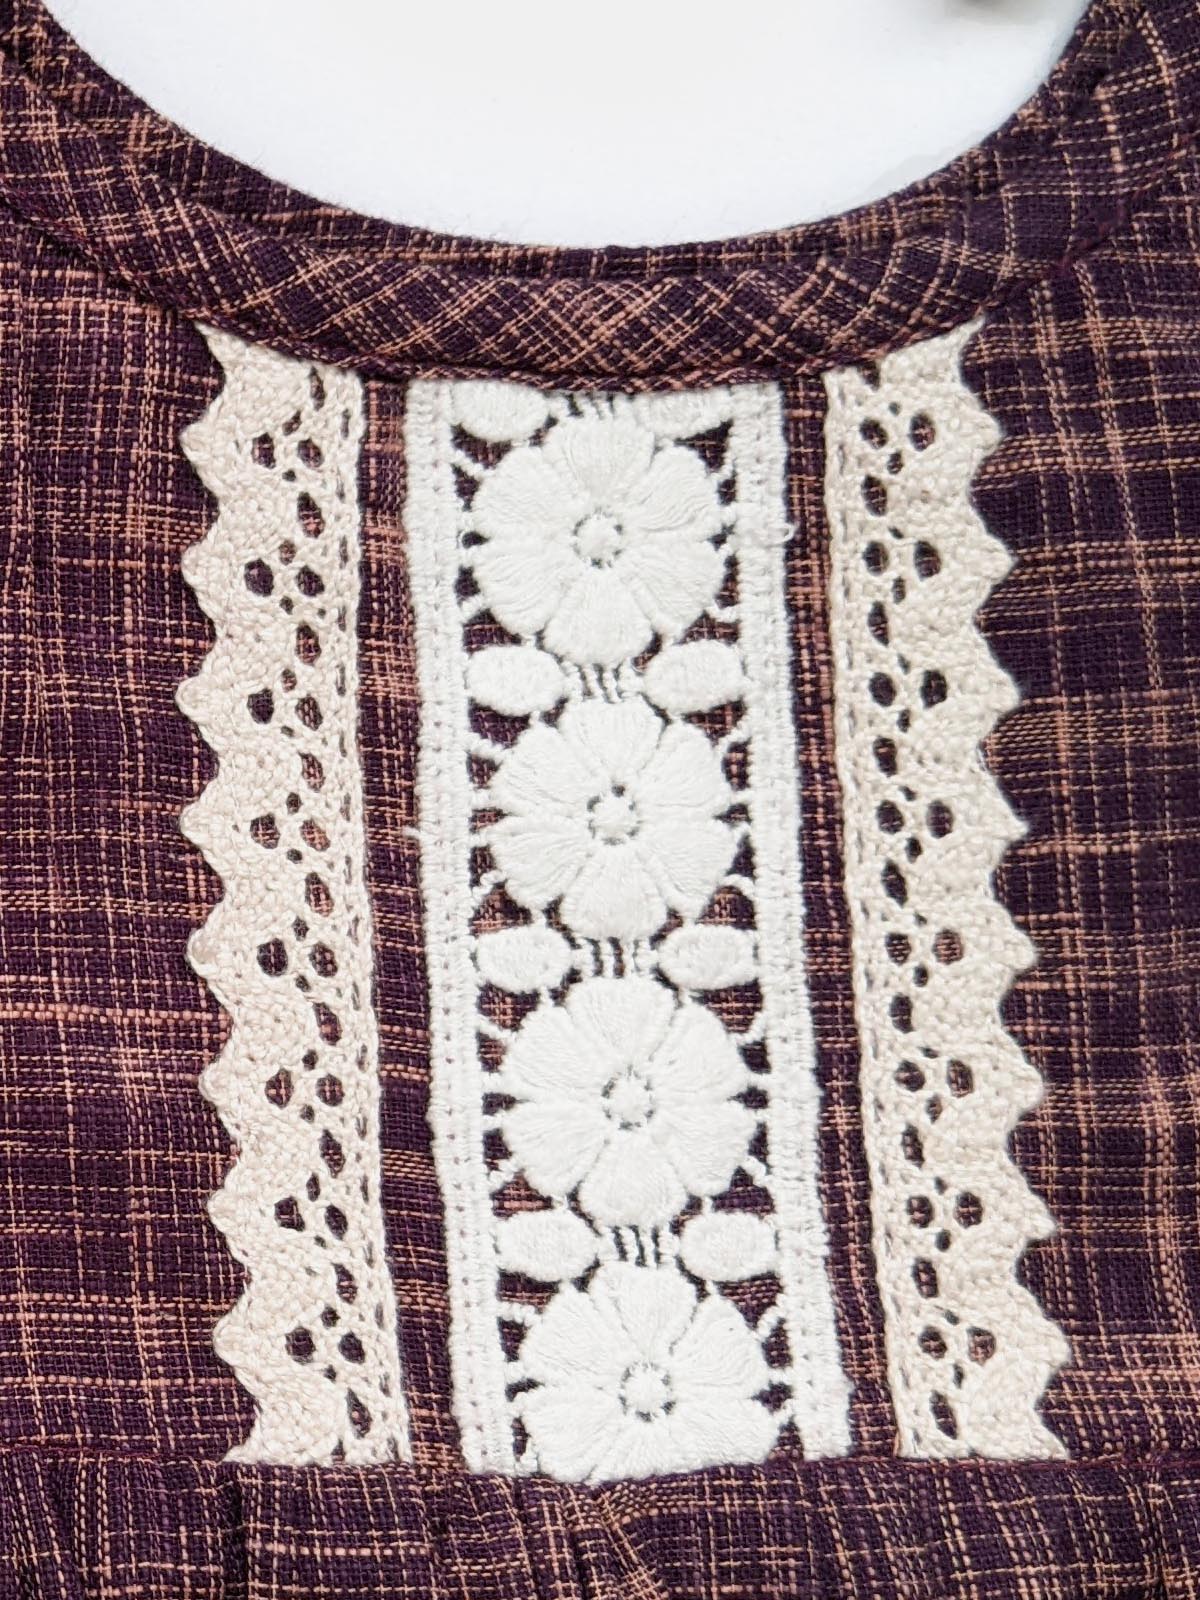 Girl's Deep Wine Cotton Romper with Crochette Lace  - HALEMONS